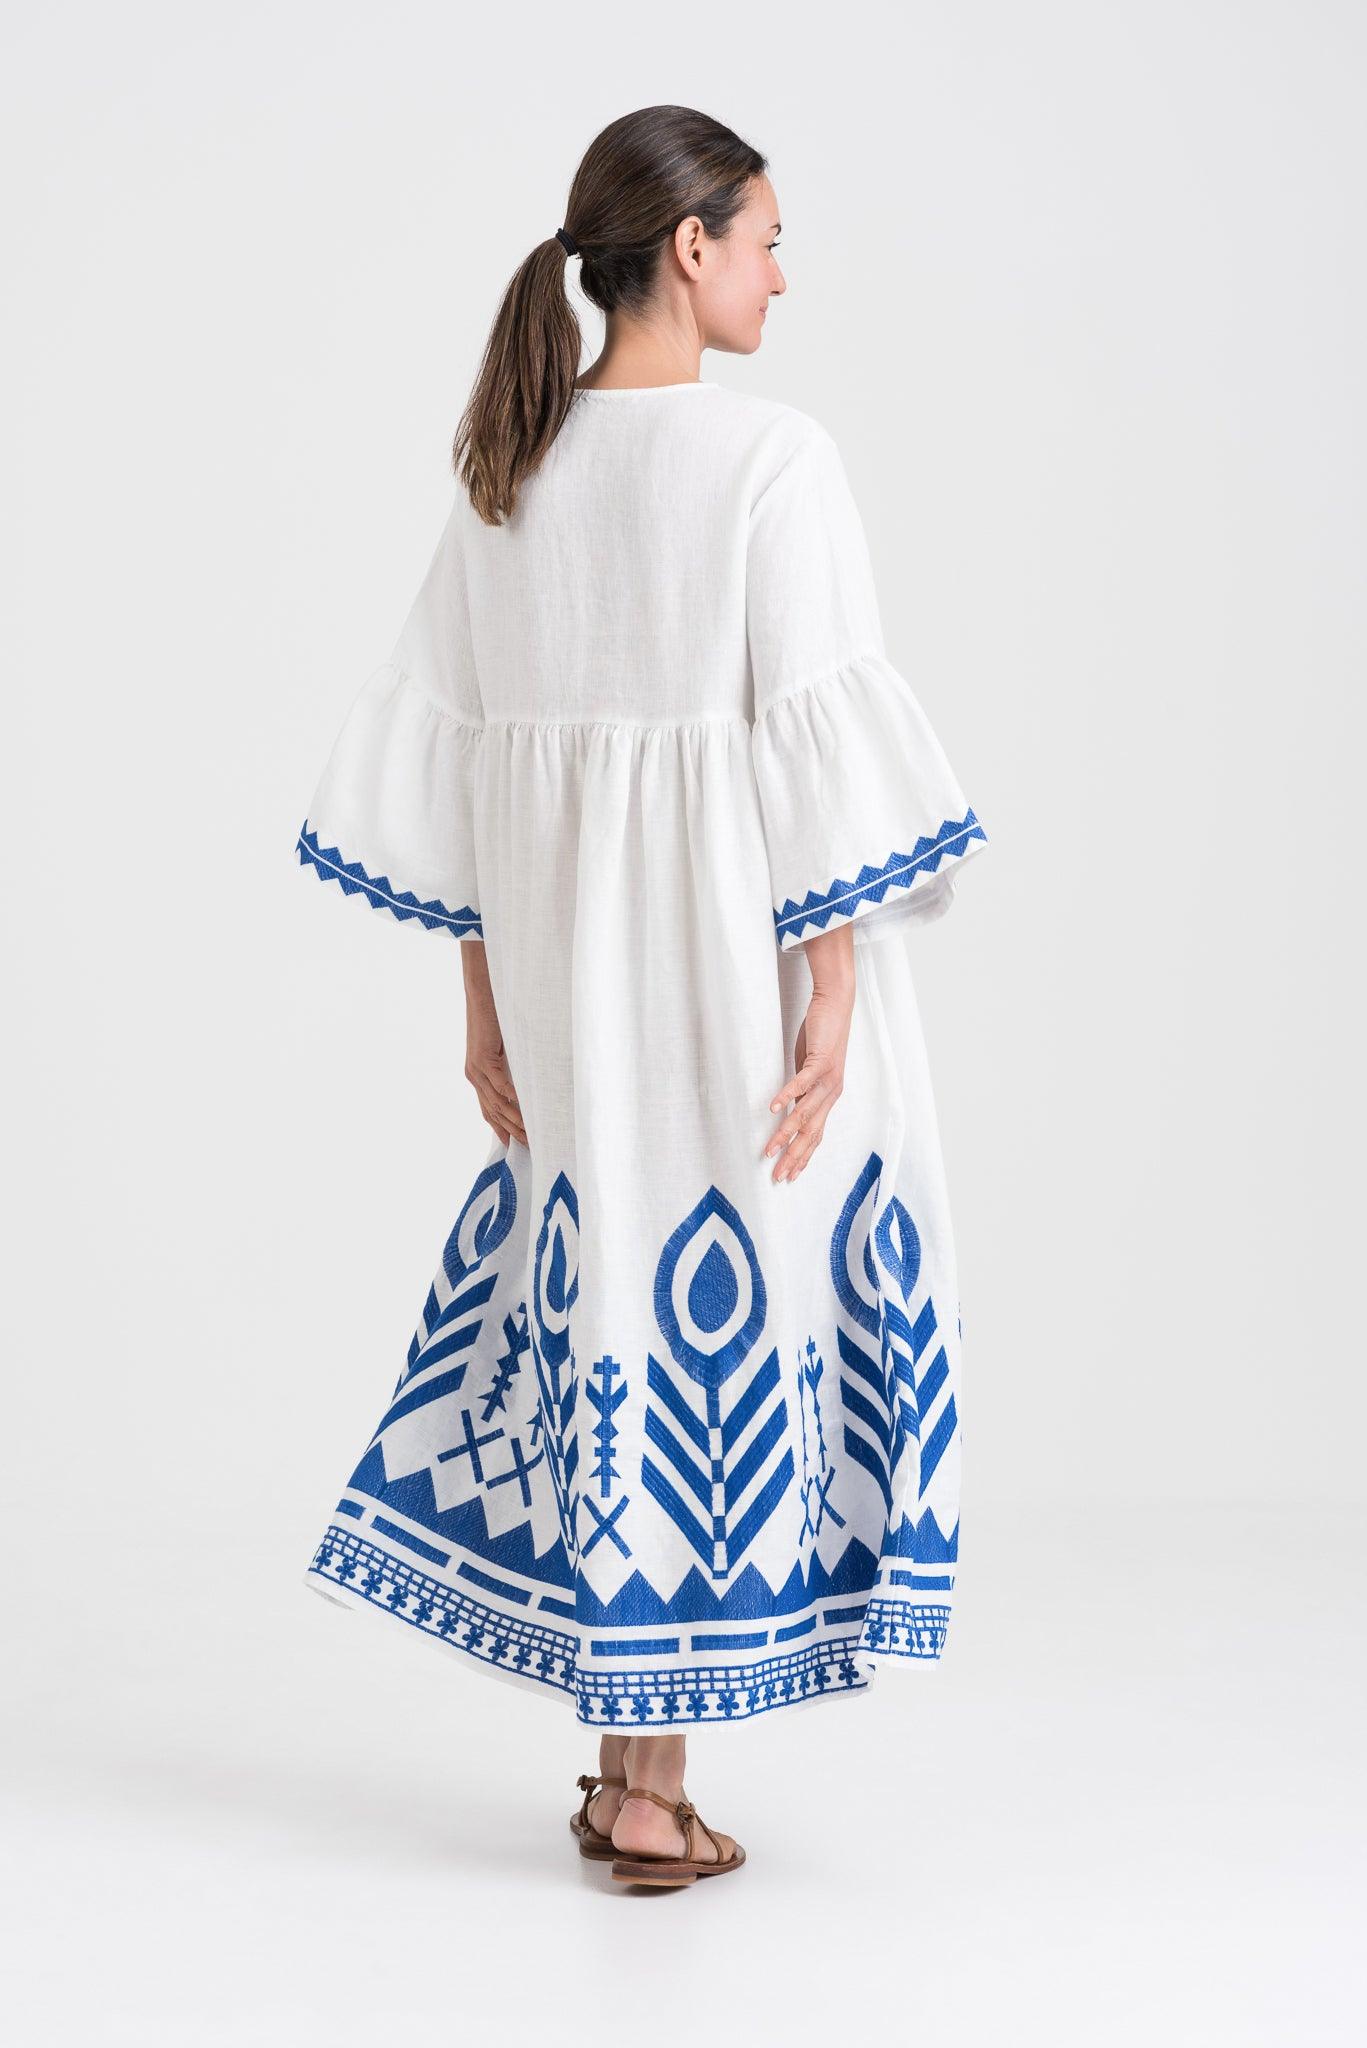 GREEK ARCHAIC KORI | Long linen Dress, Bell Sleeves White & Blue - Pasha Living 